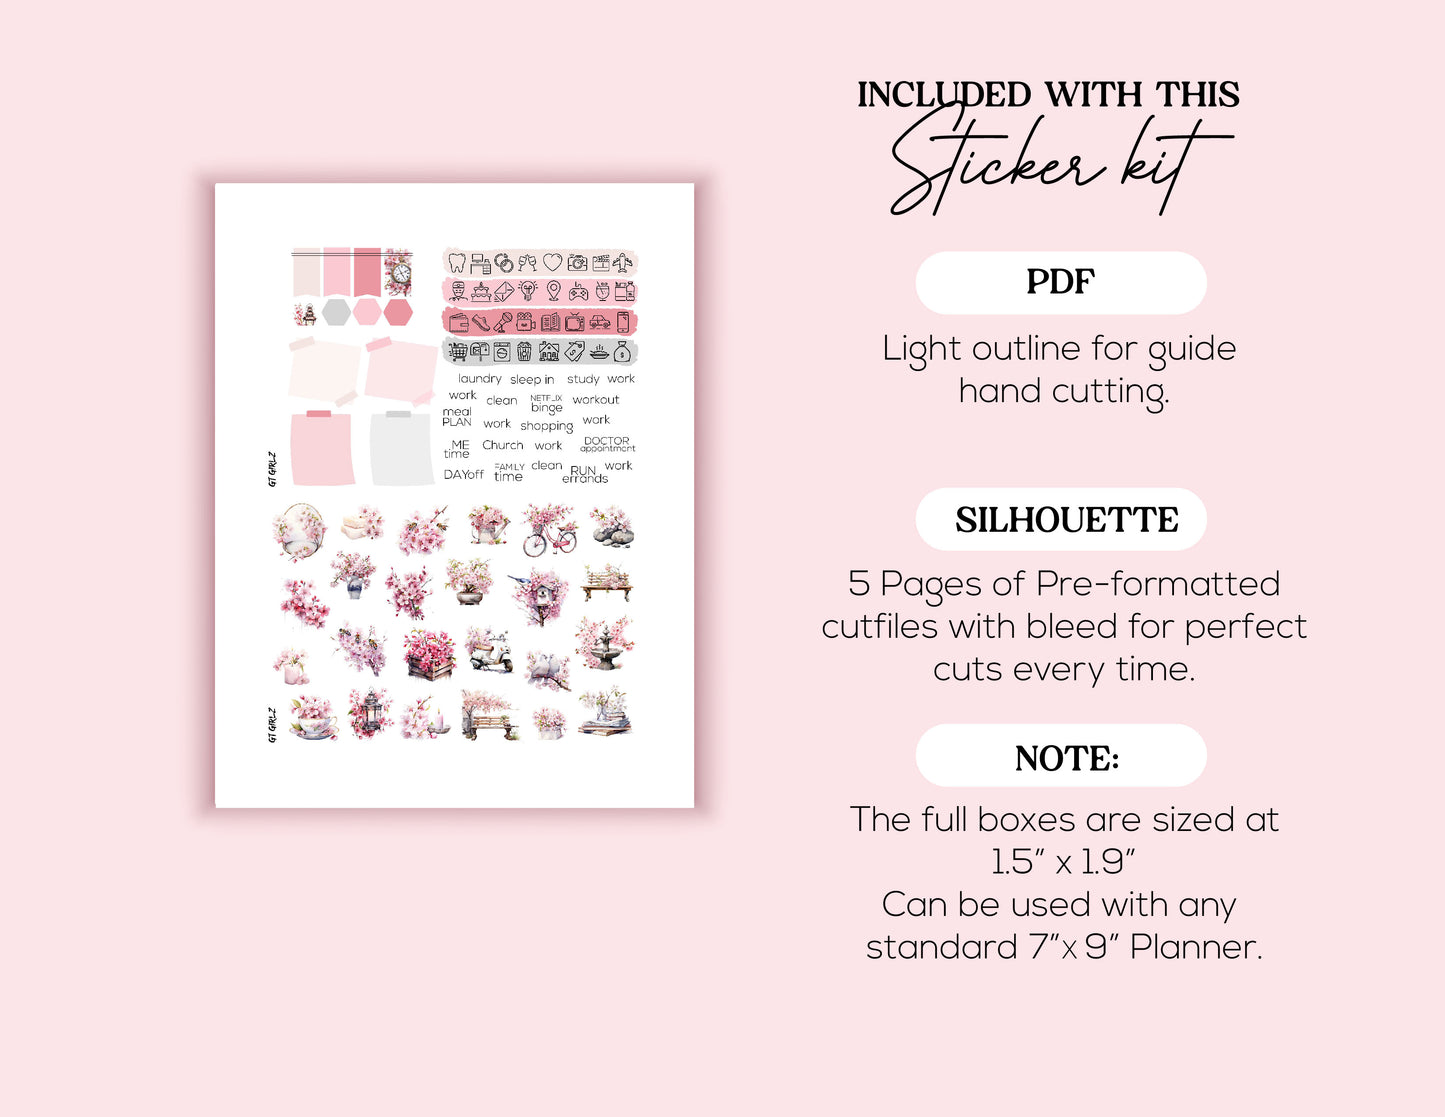 Cherry Blossom Weekly Printable